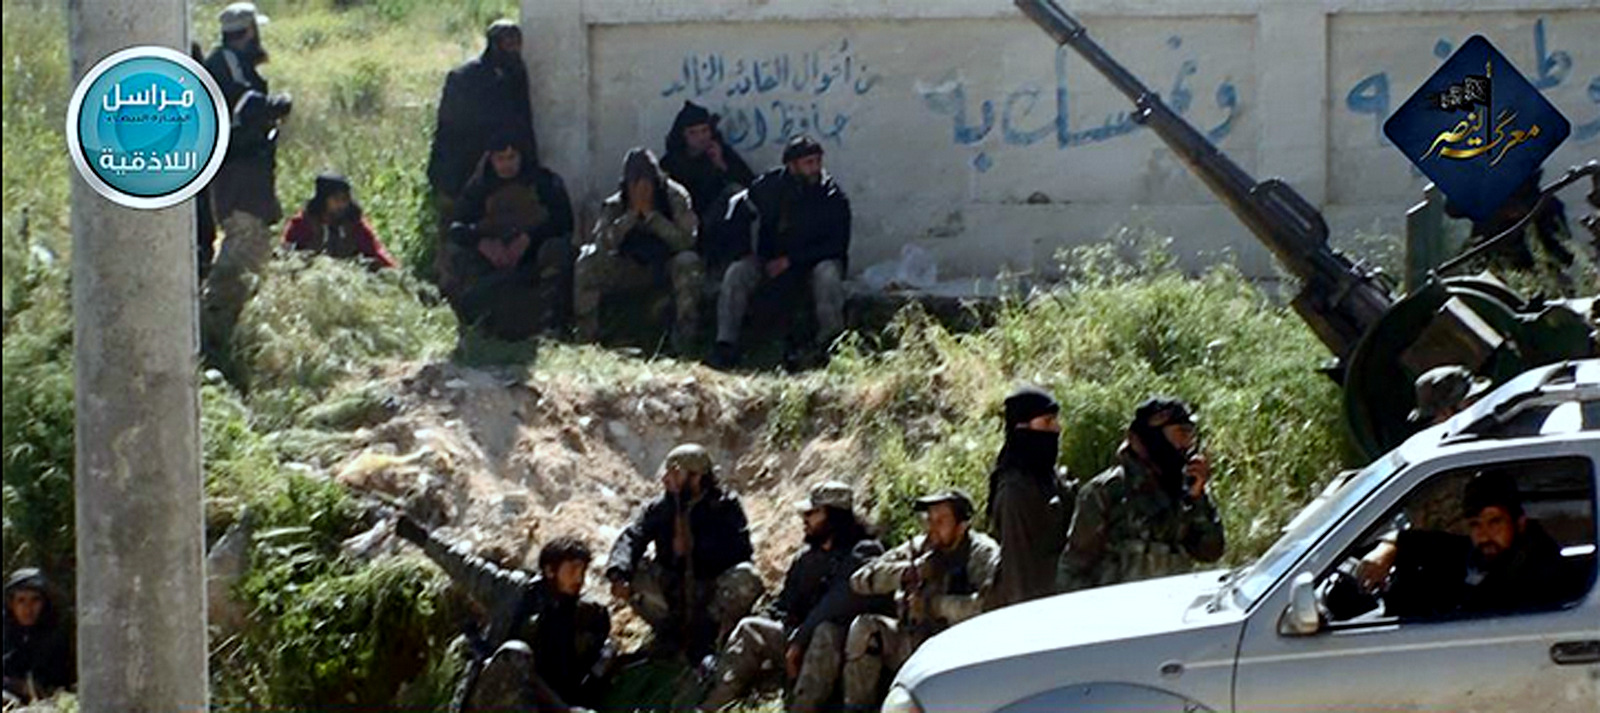 Fighters from Nusra Front,. Al-Qaida’s branch in Syria, in the town of Jisr al-Shughour, Idlib province.